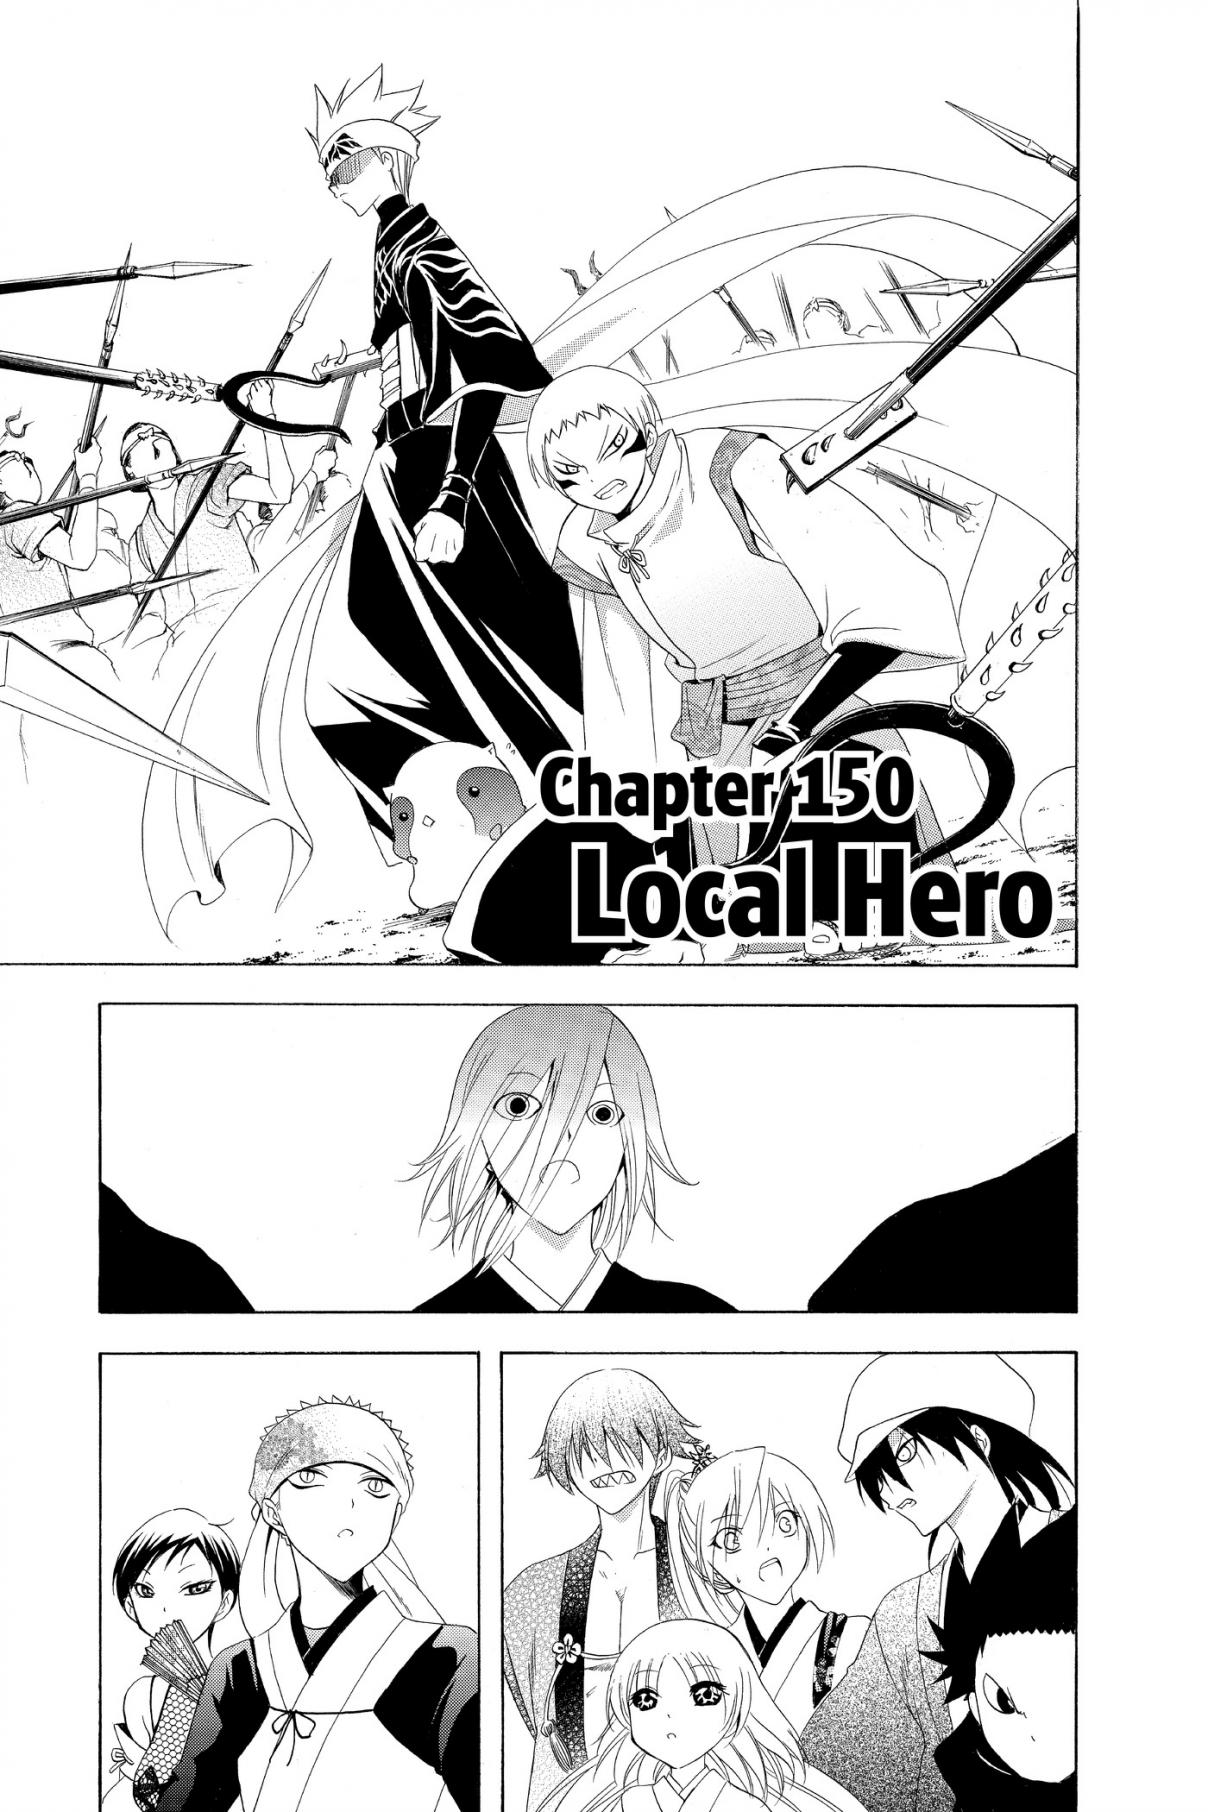 Itsuwaribito Utsuho Vol. 16 Ch. 150 Local Hero